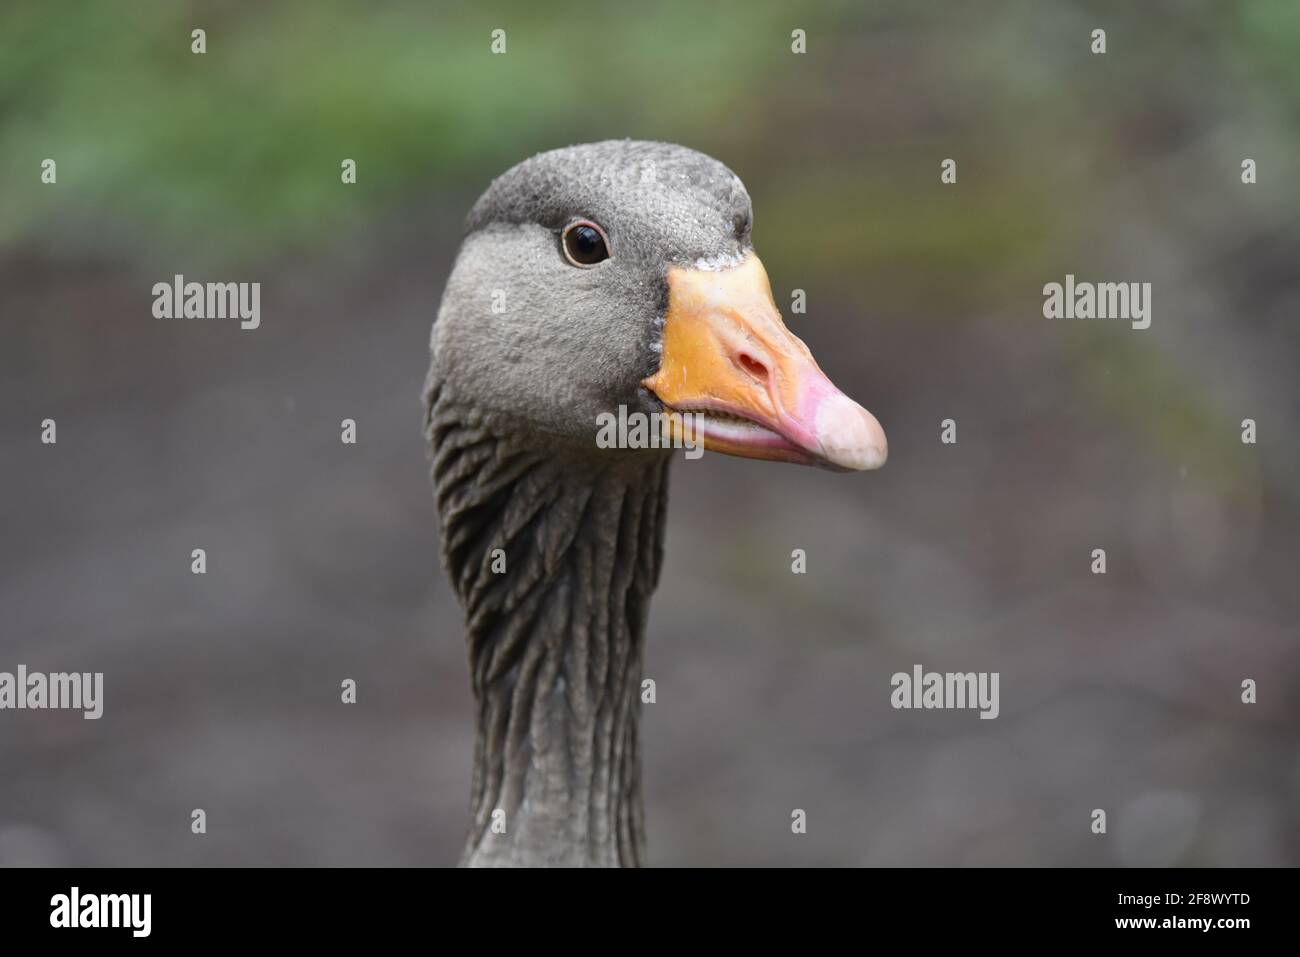 Greylag Goose, Anser anser, Right Side Close-Up Portrait Taken in Spring in the UK Stock Photo